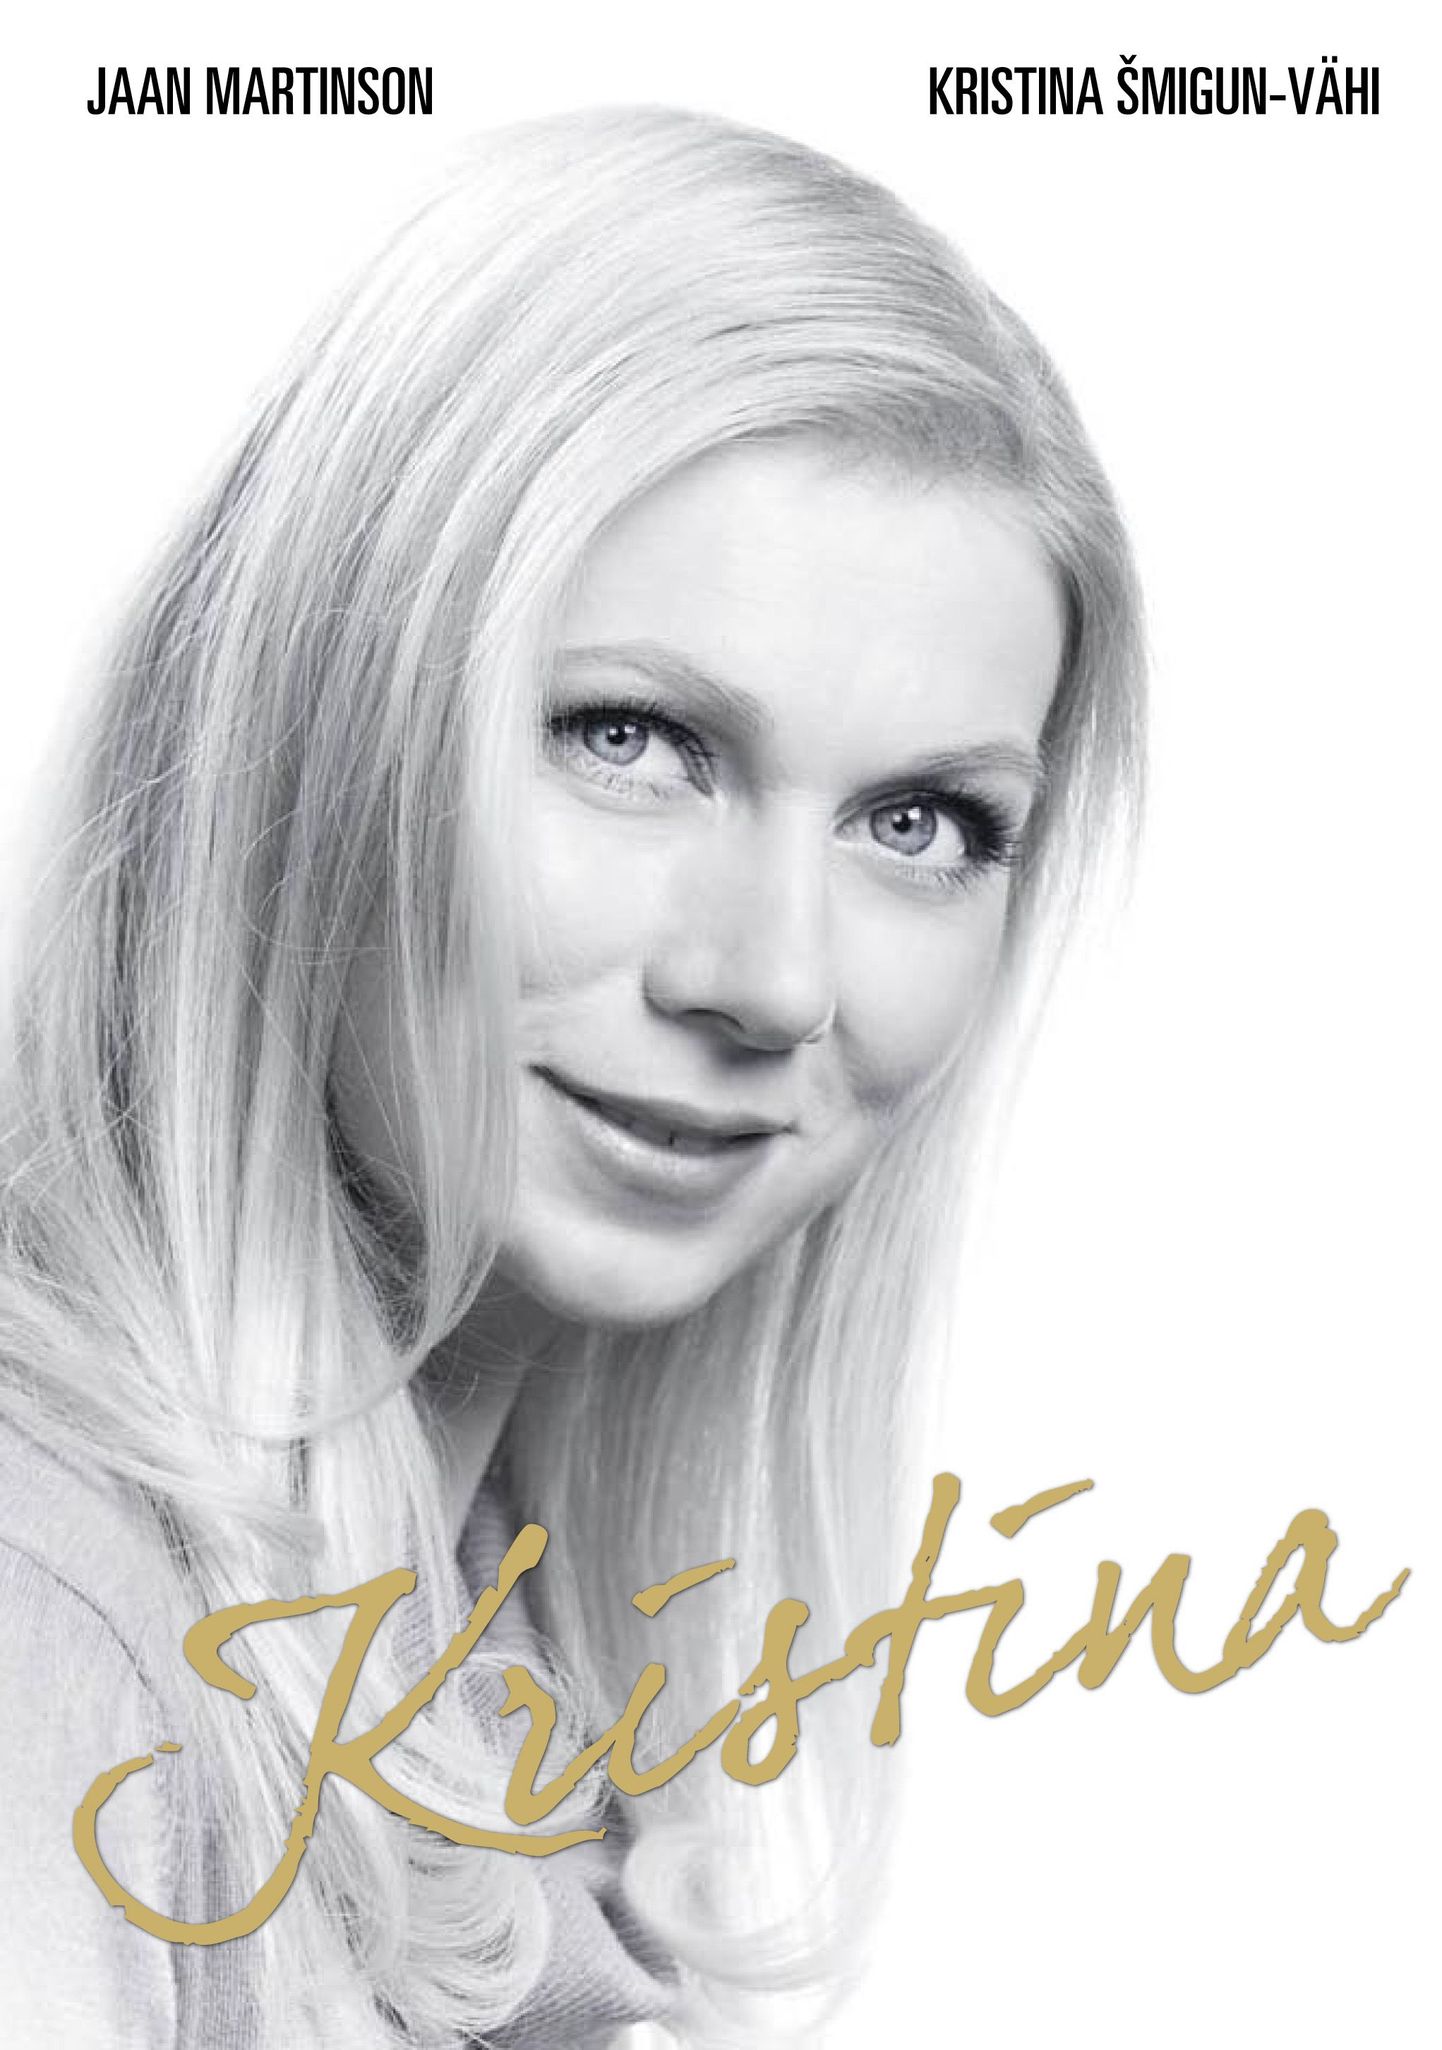 Обложка книги "Kristina".